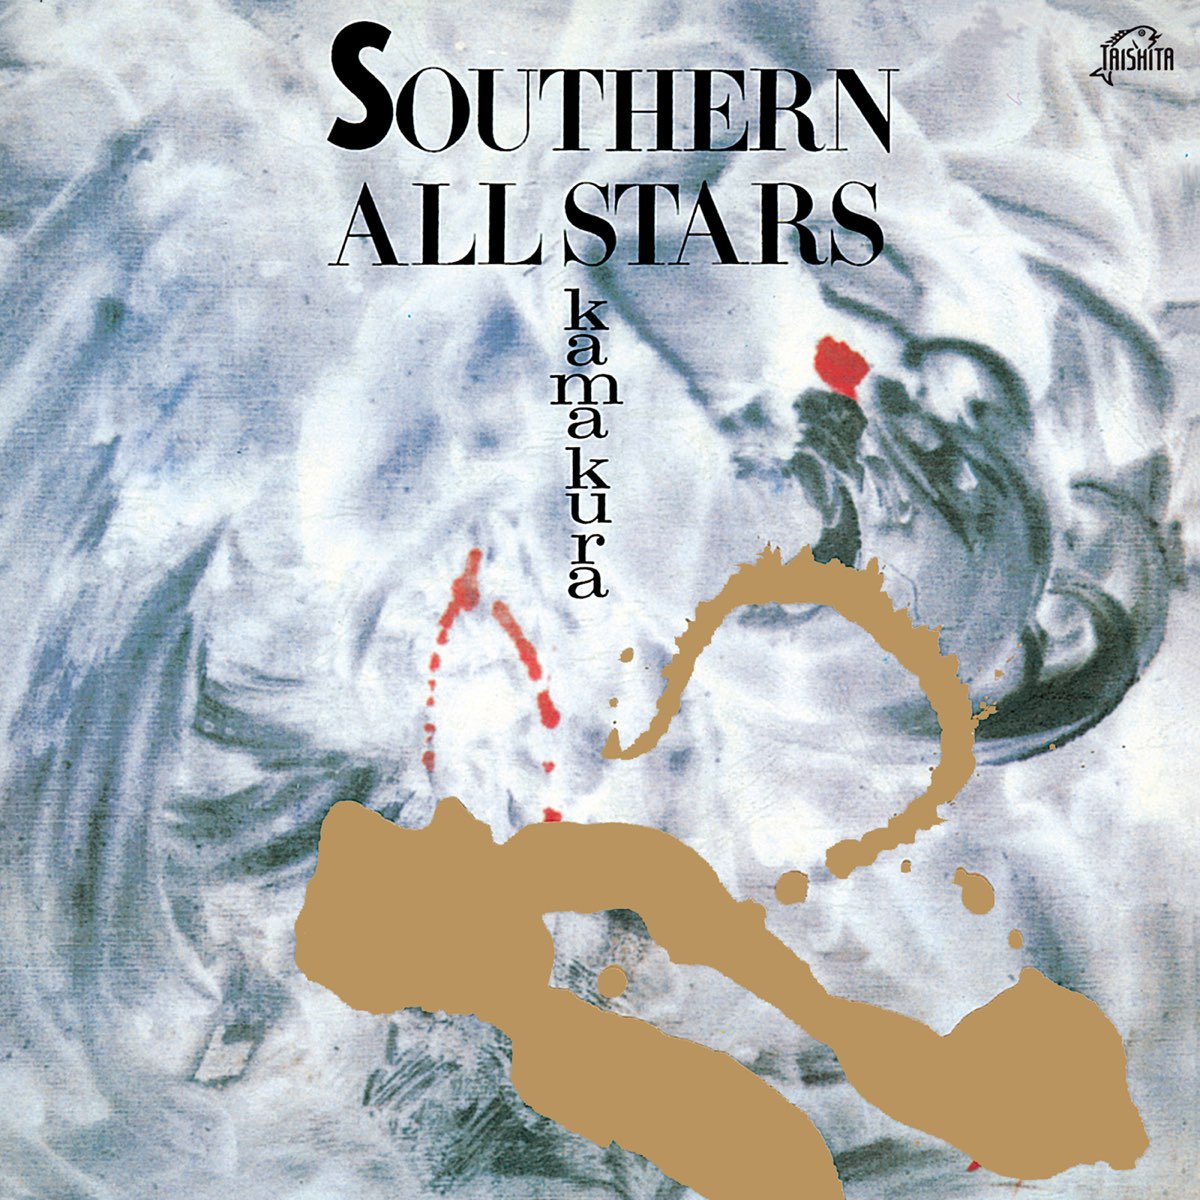 Kamakura - Album by Southern All Stars - Apple Music